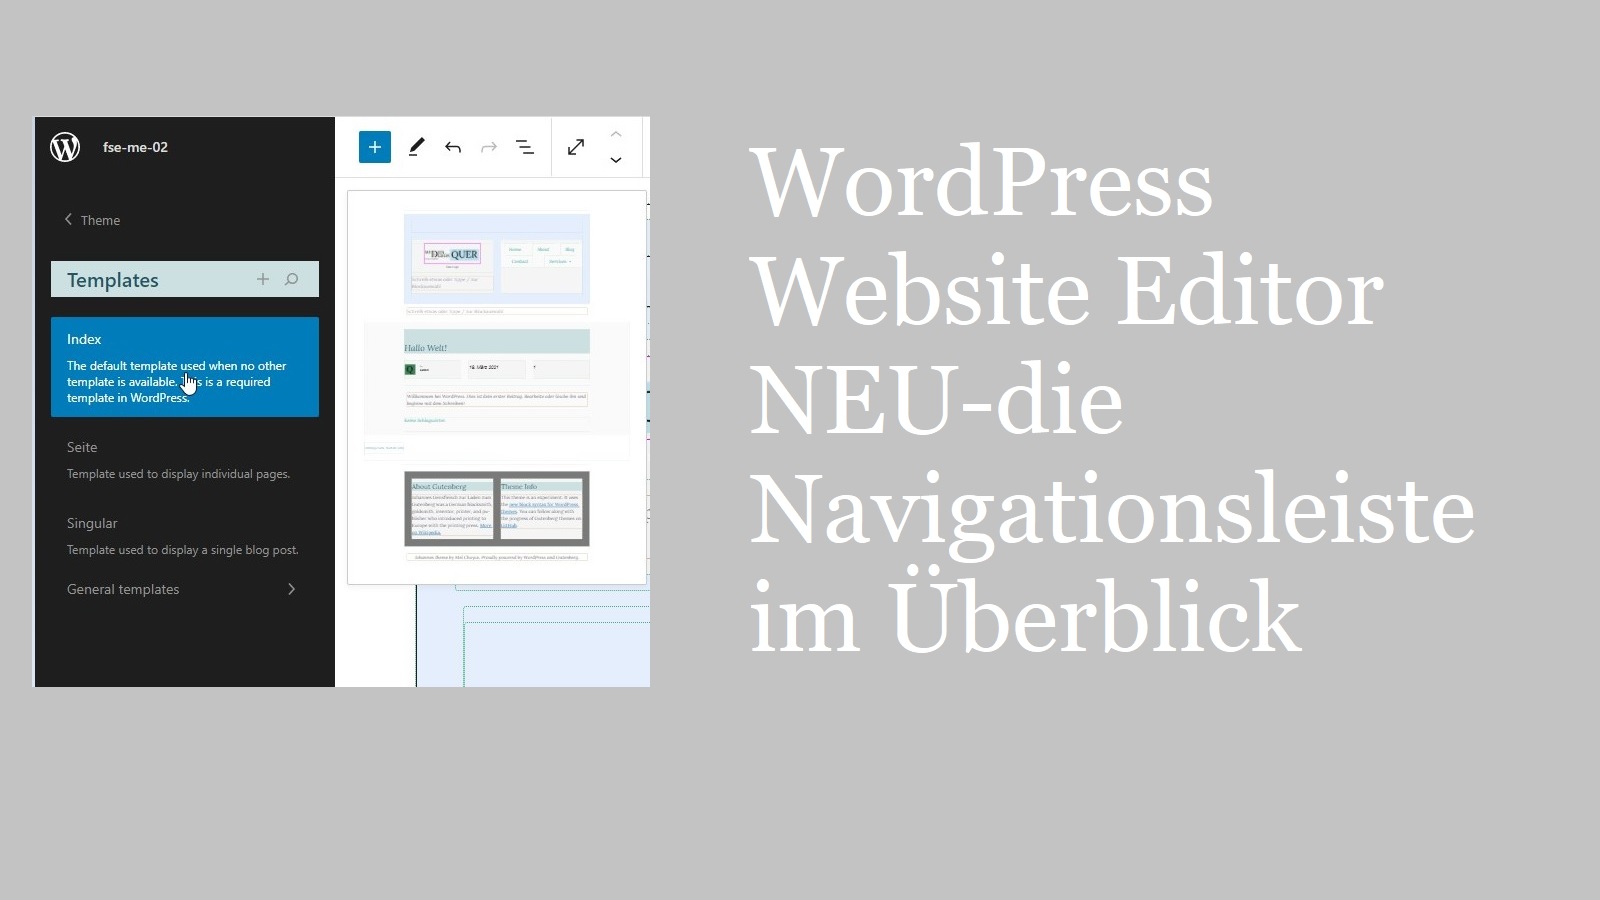 WordPress Website Editor NEU-die Navigationsleiste im Überblick